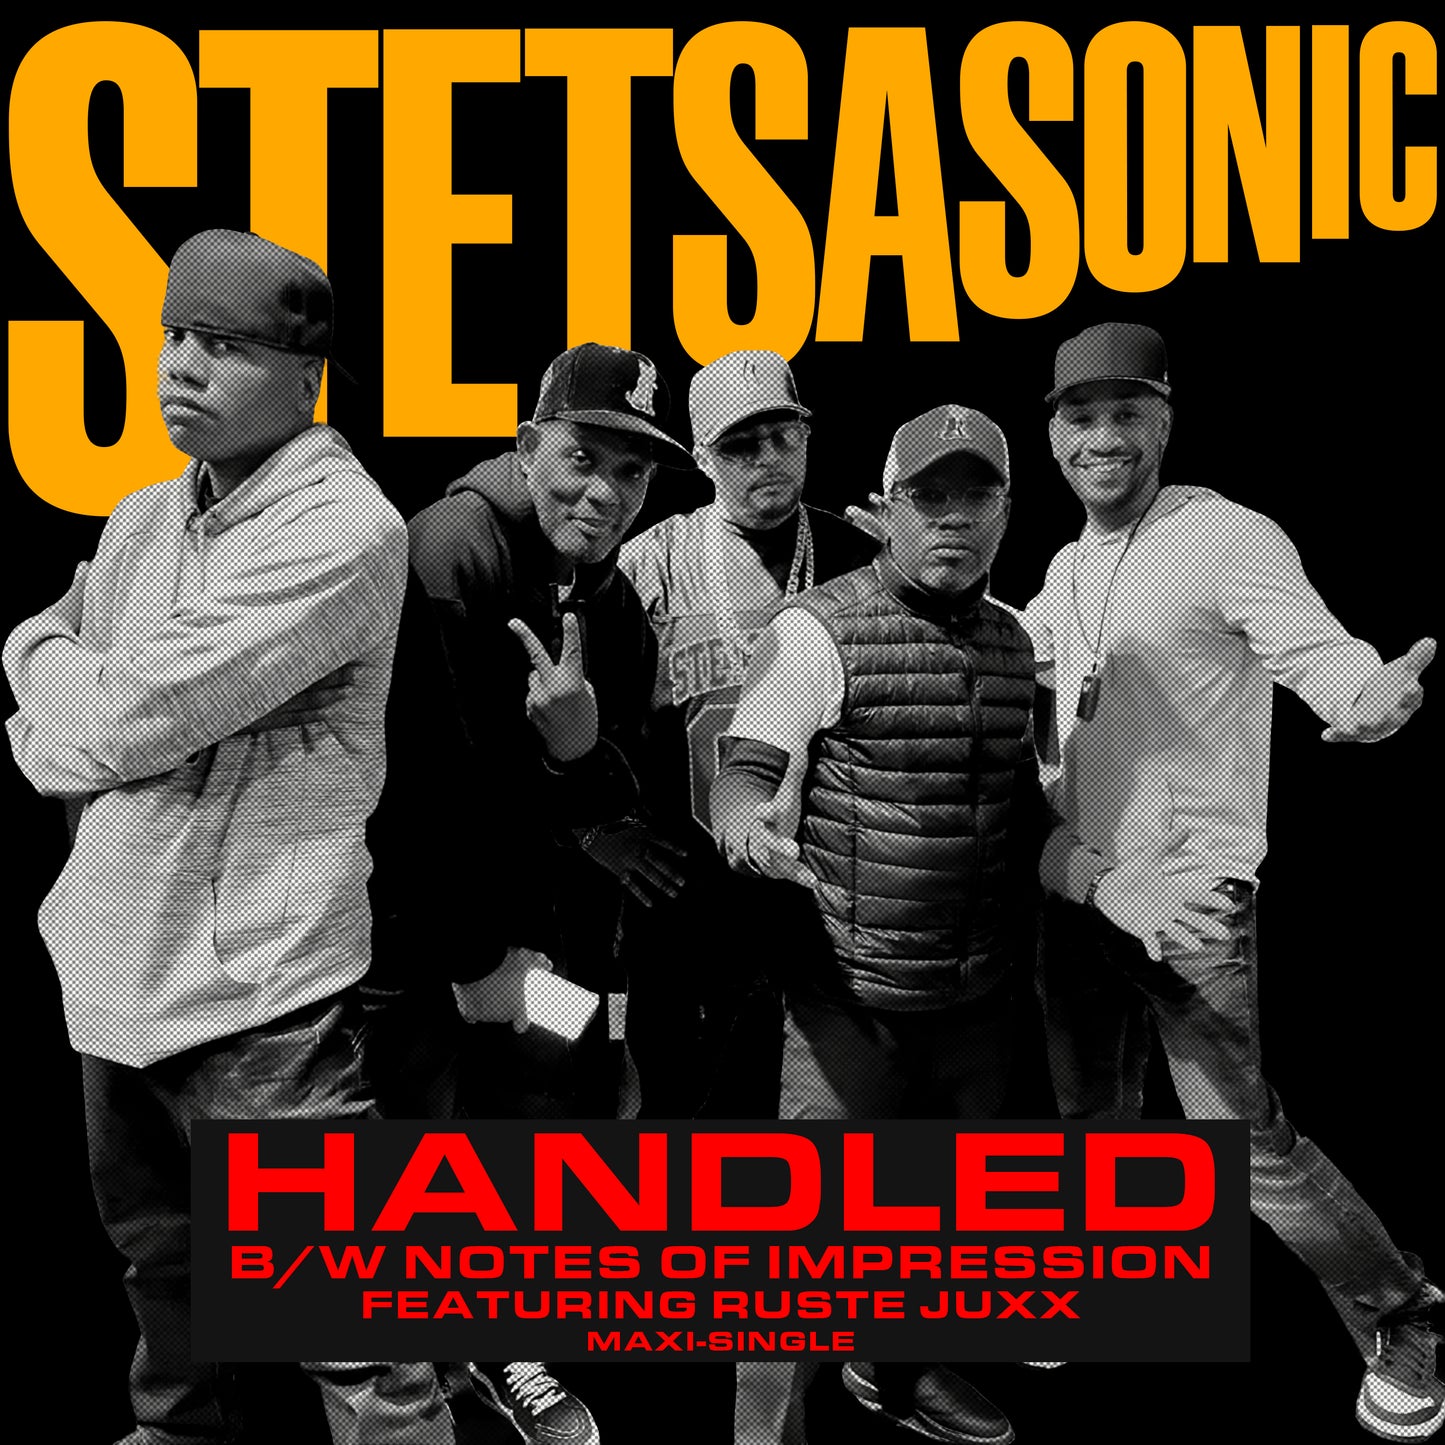 Stetsasonic - Handled b/w Notes of Impression (CD-R Maxi-Single)